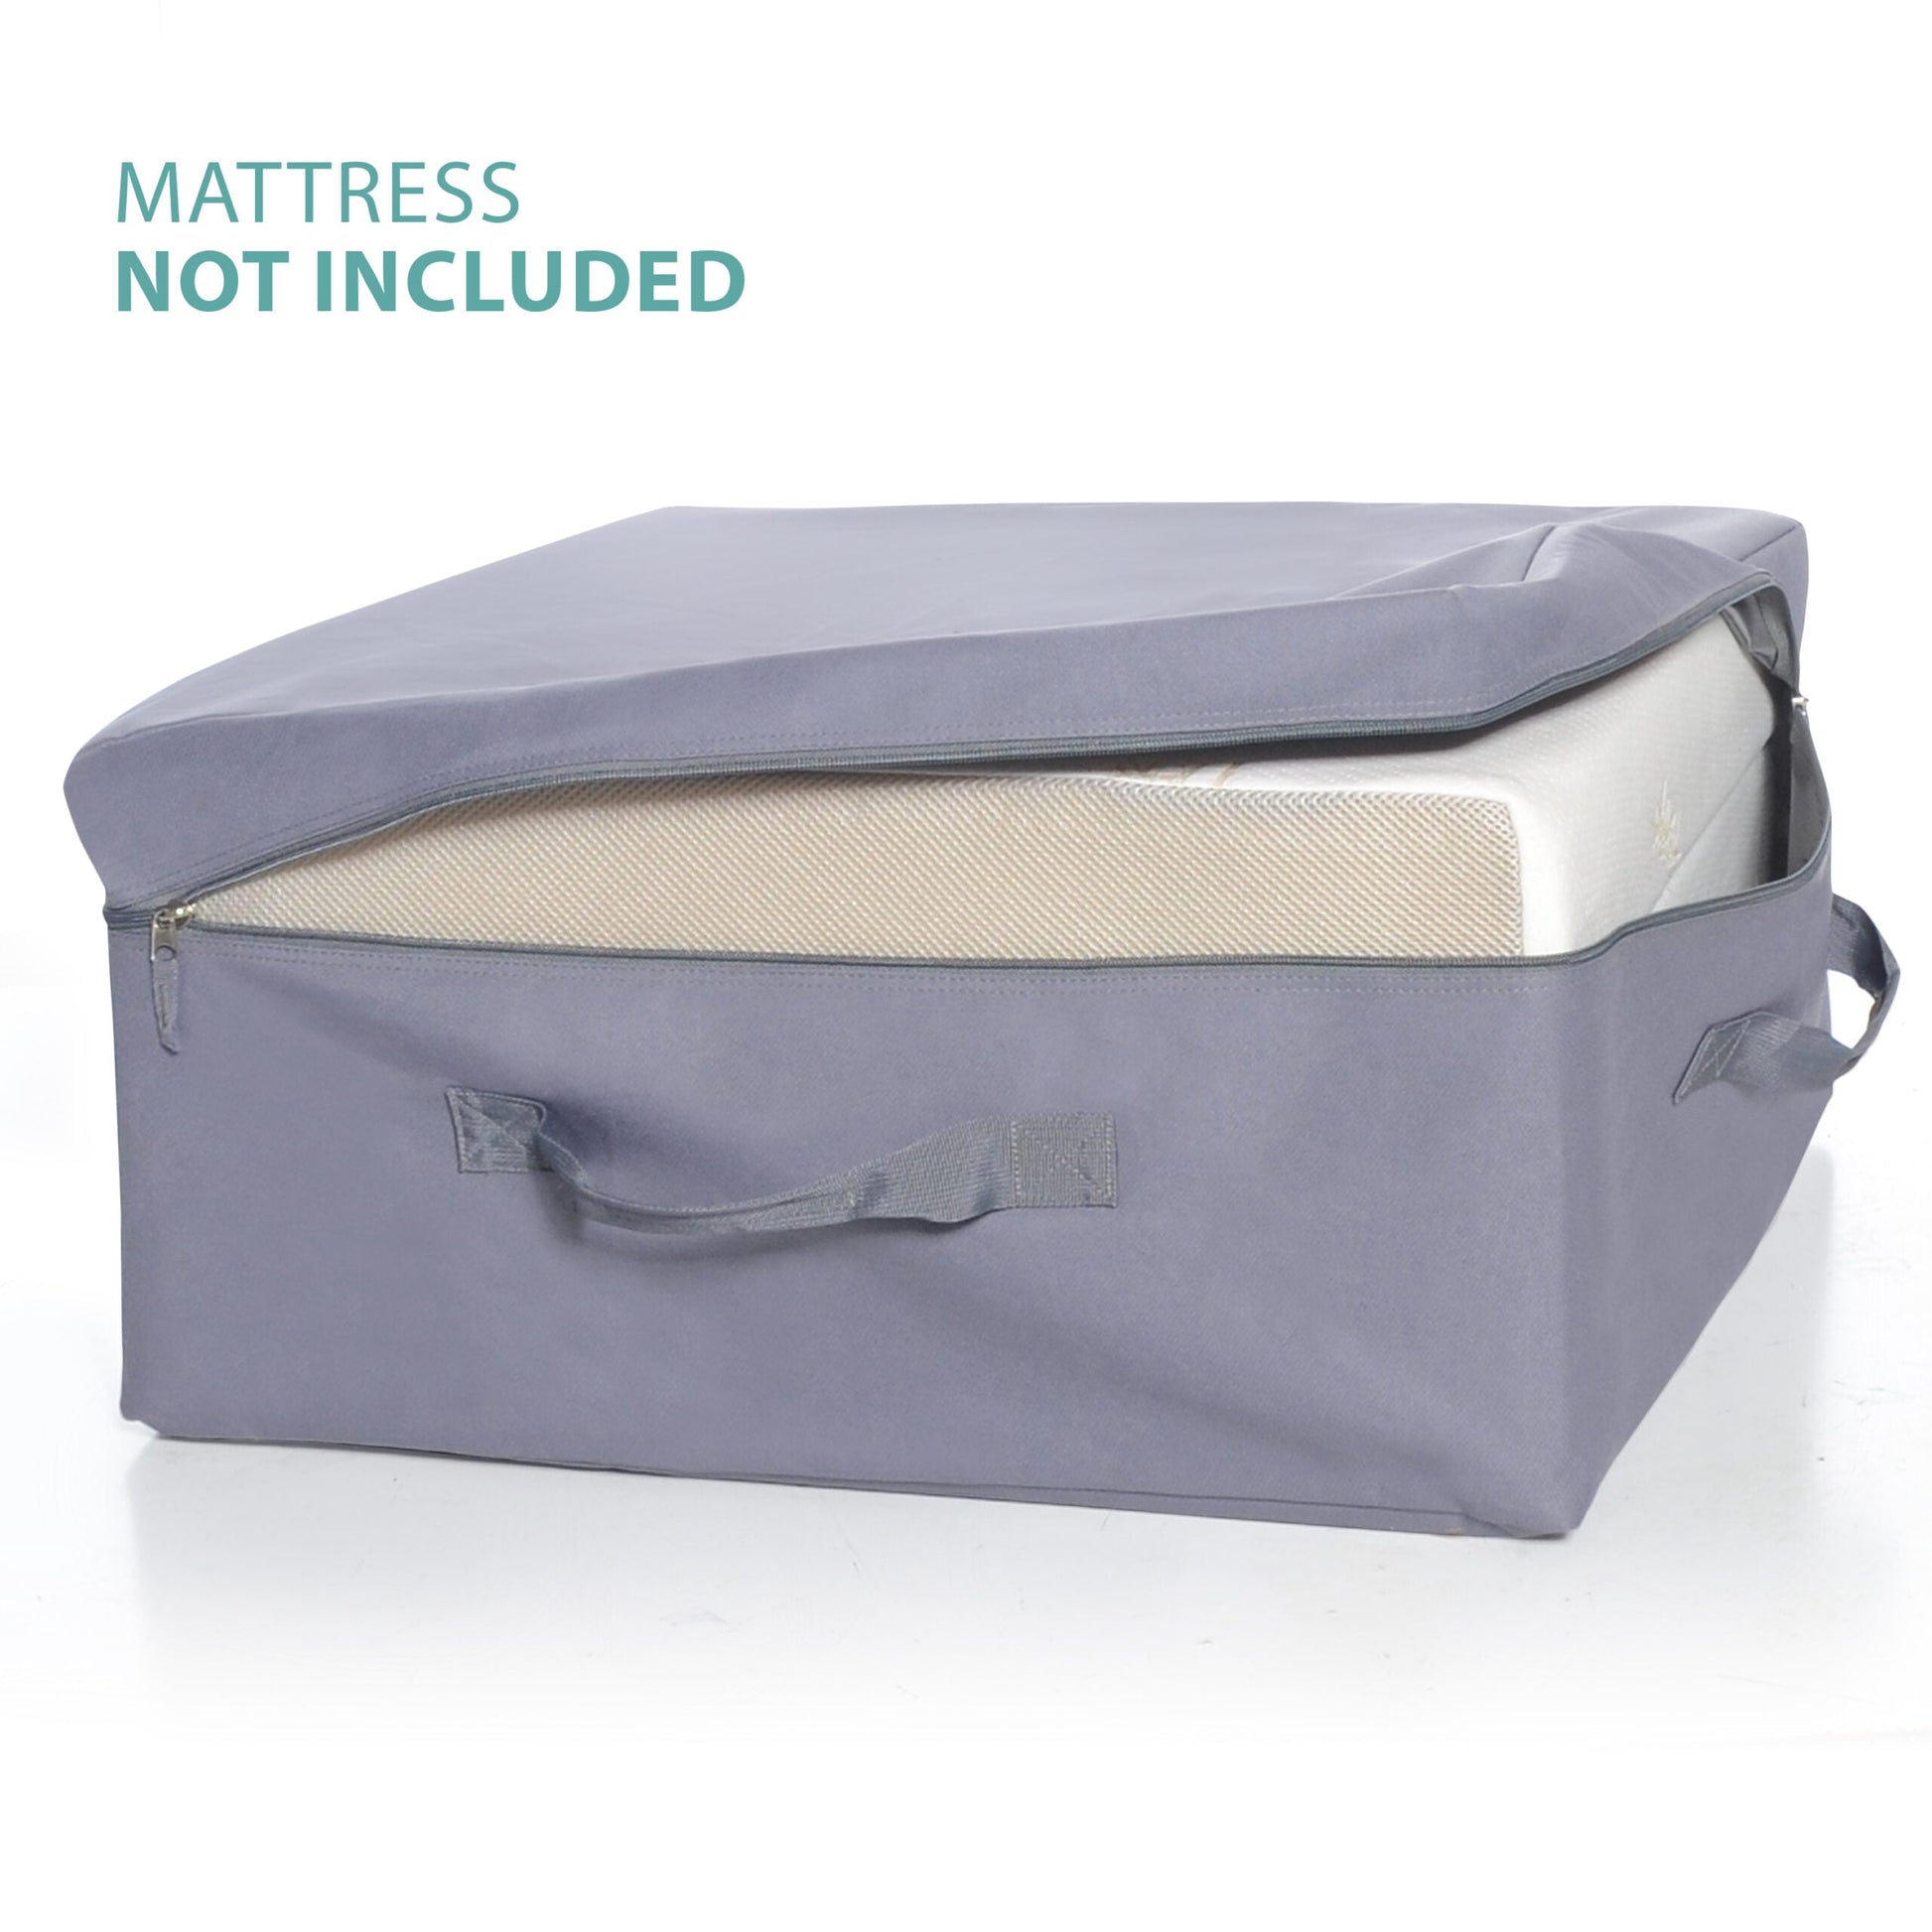 6 Inch Tri-fold Mattress Carry Case - Milliard Brands